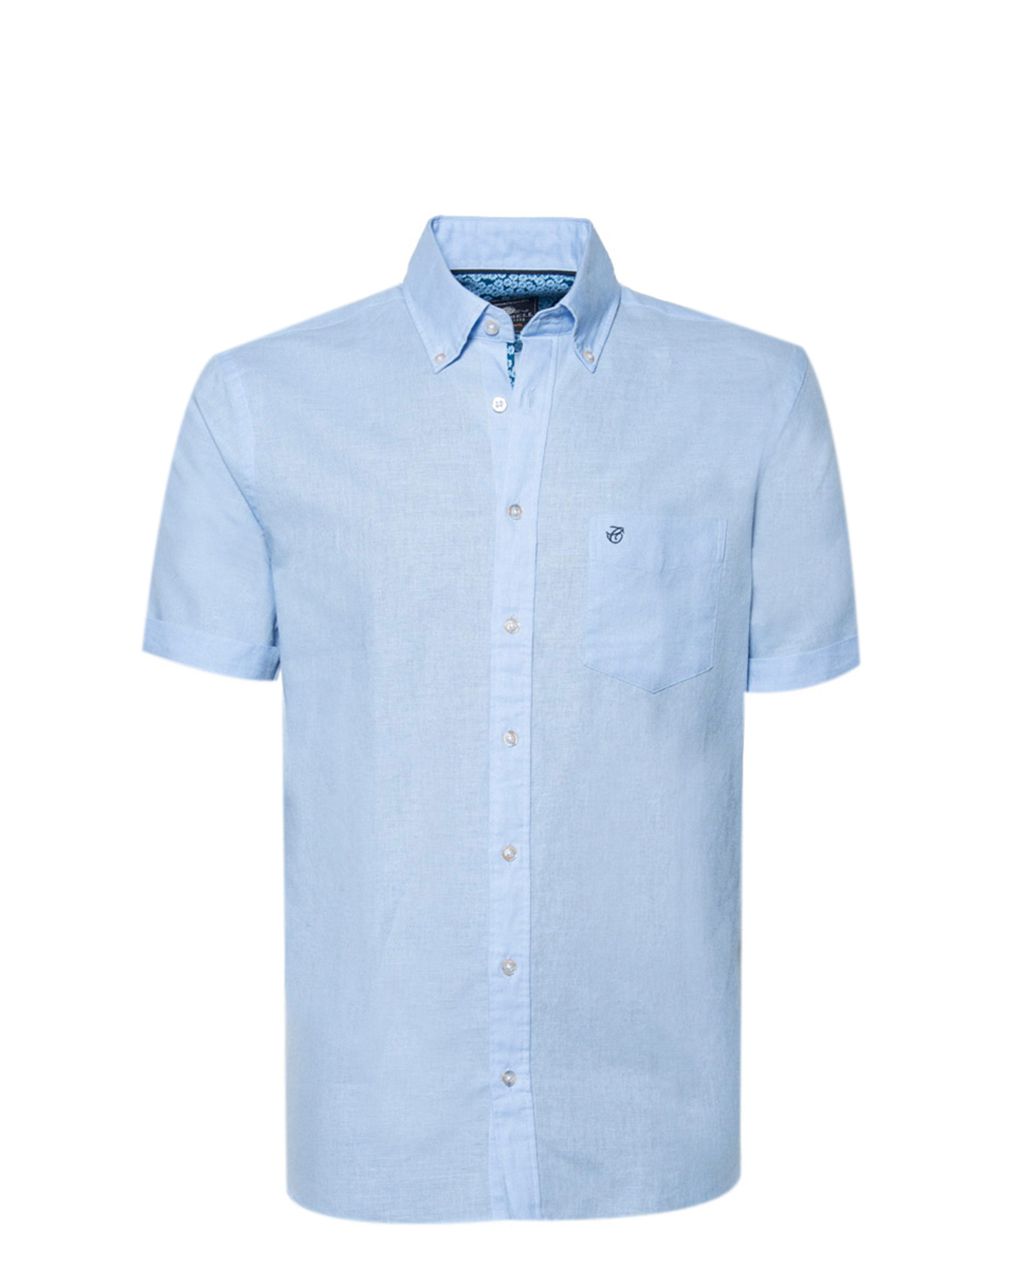 Campbell Classic Casual Overhemd KM Lichtblauw uni 052908-001-L